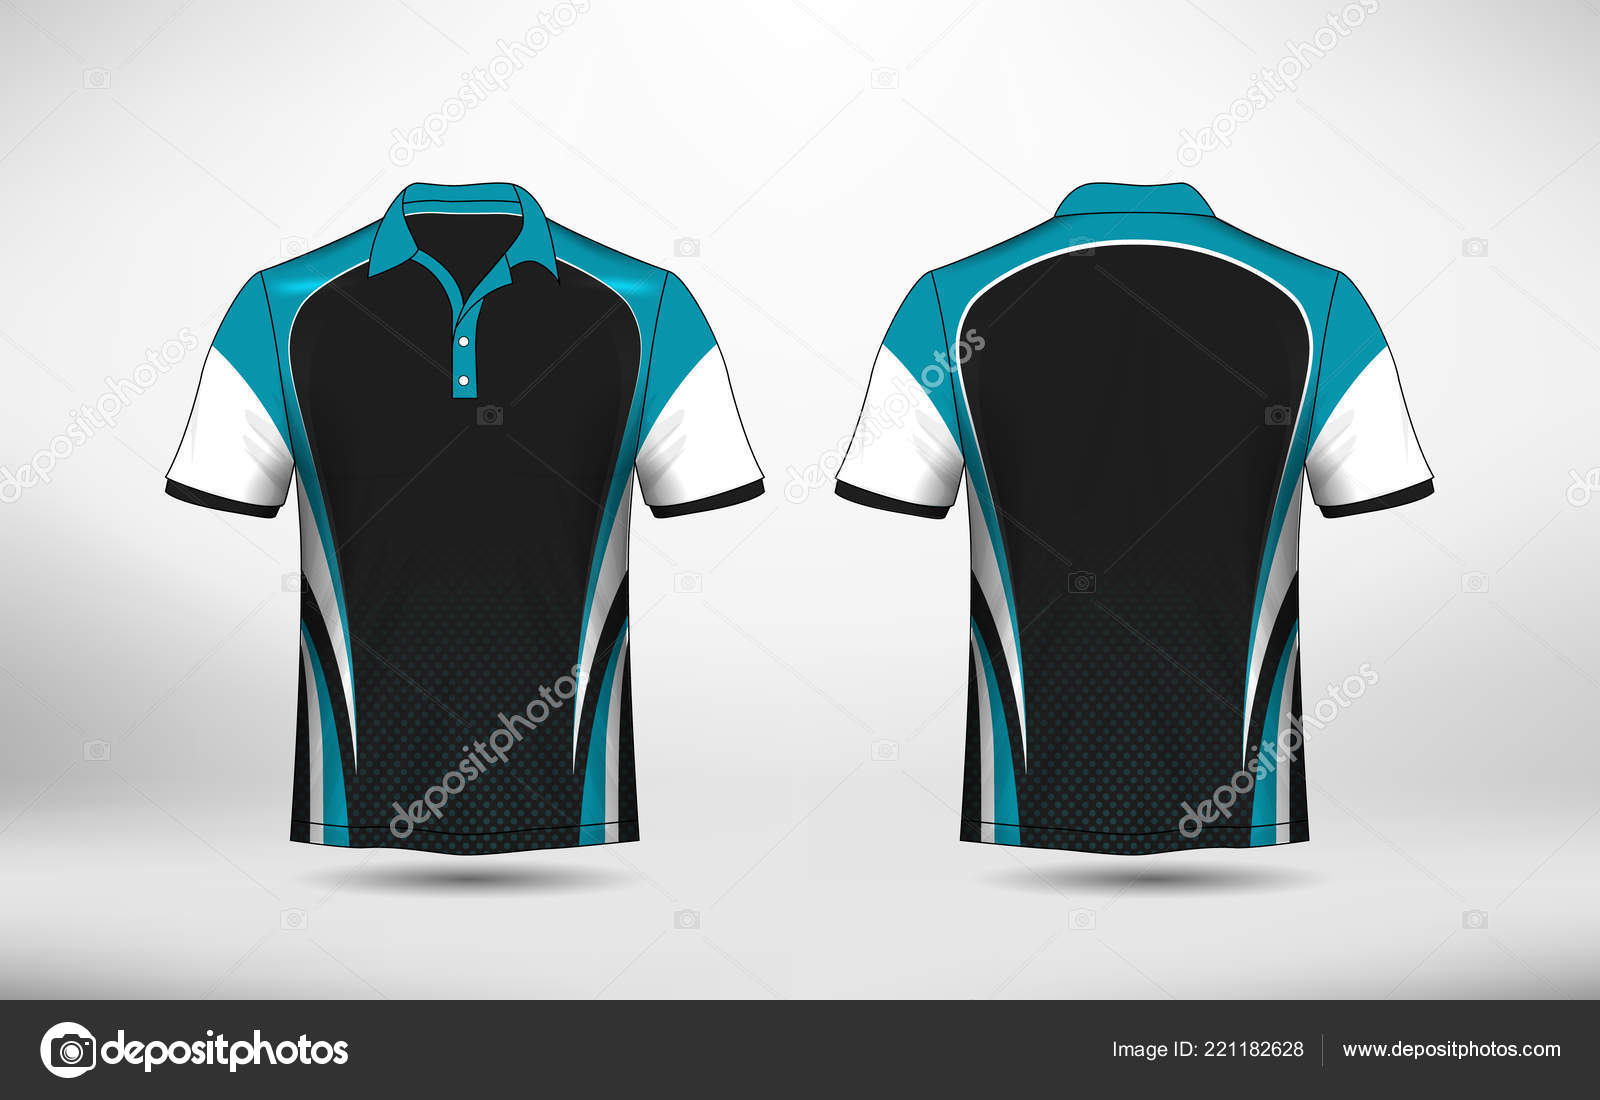 black and blue jersey design